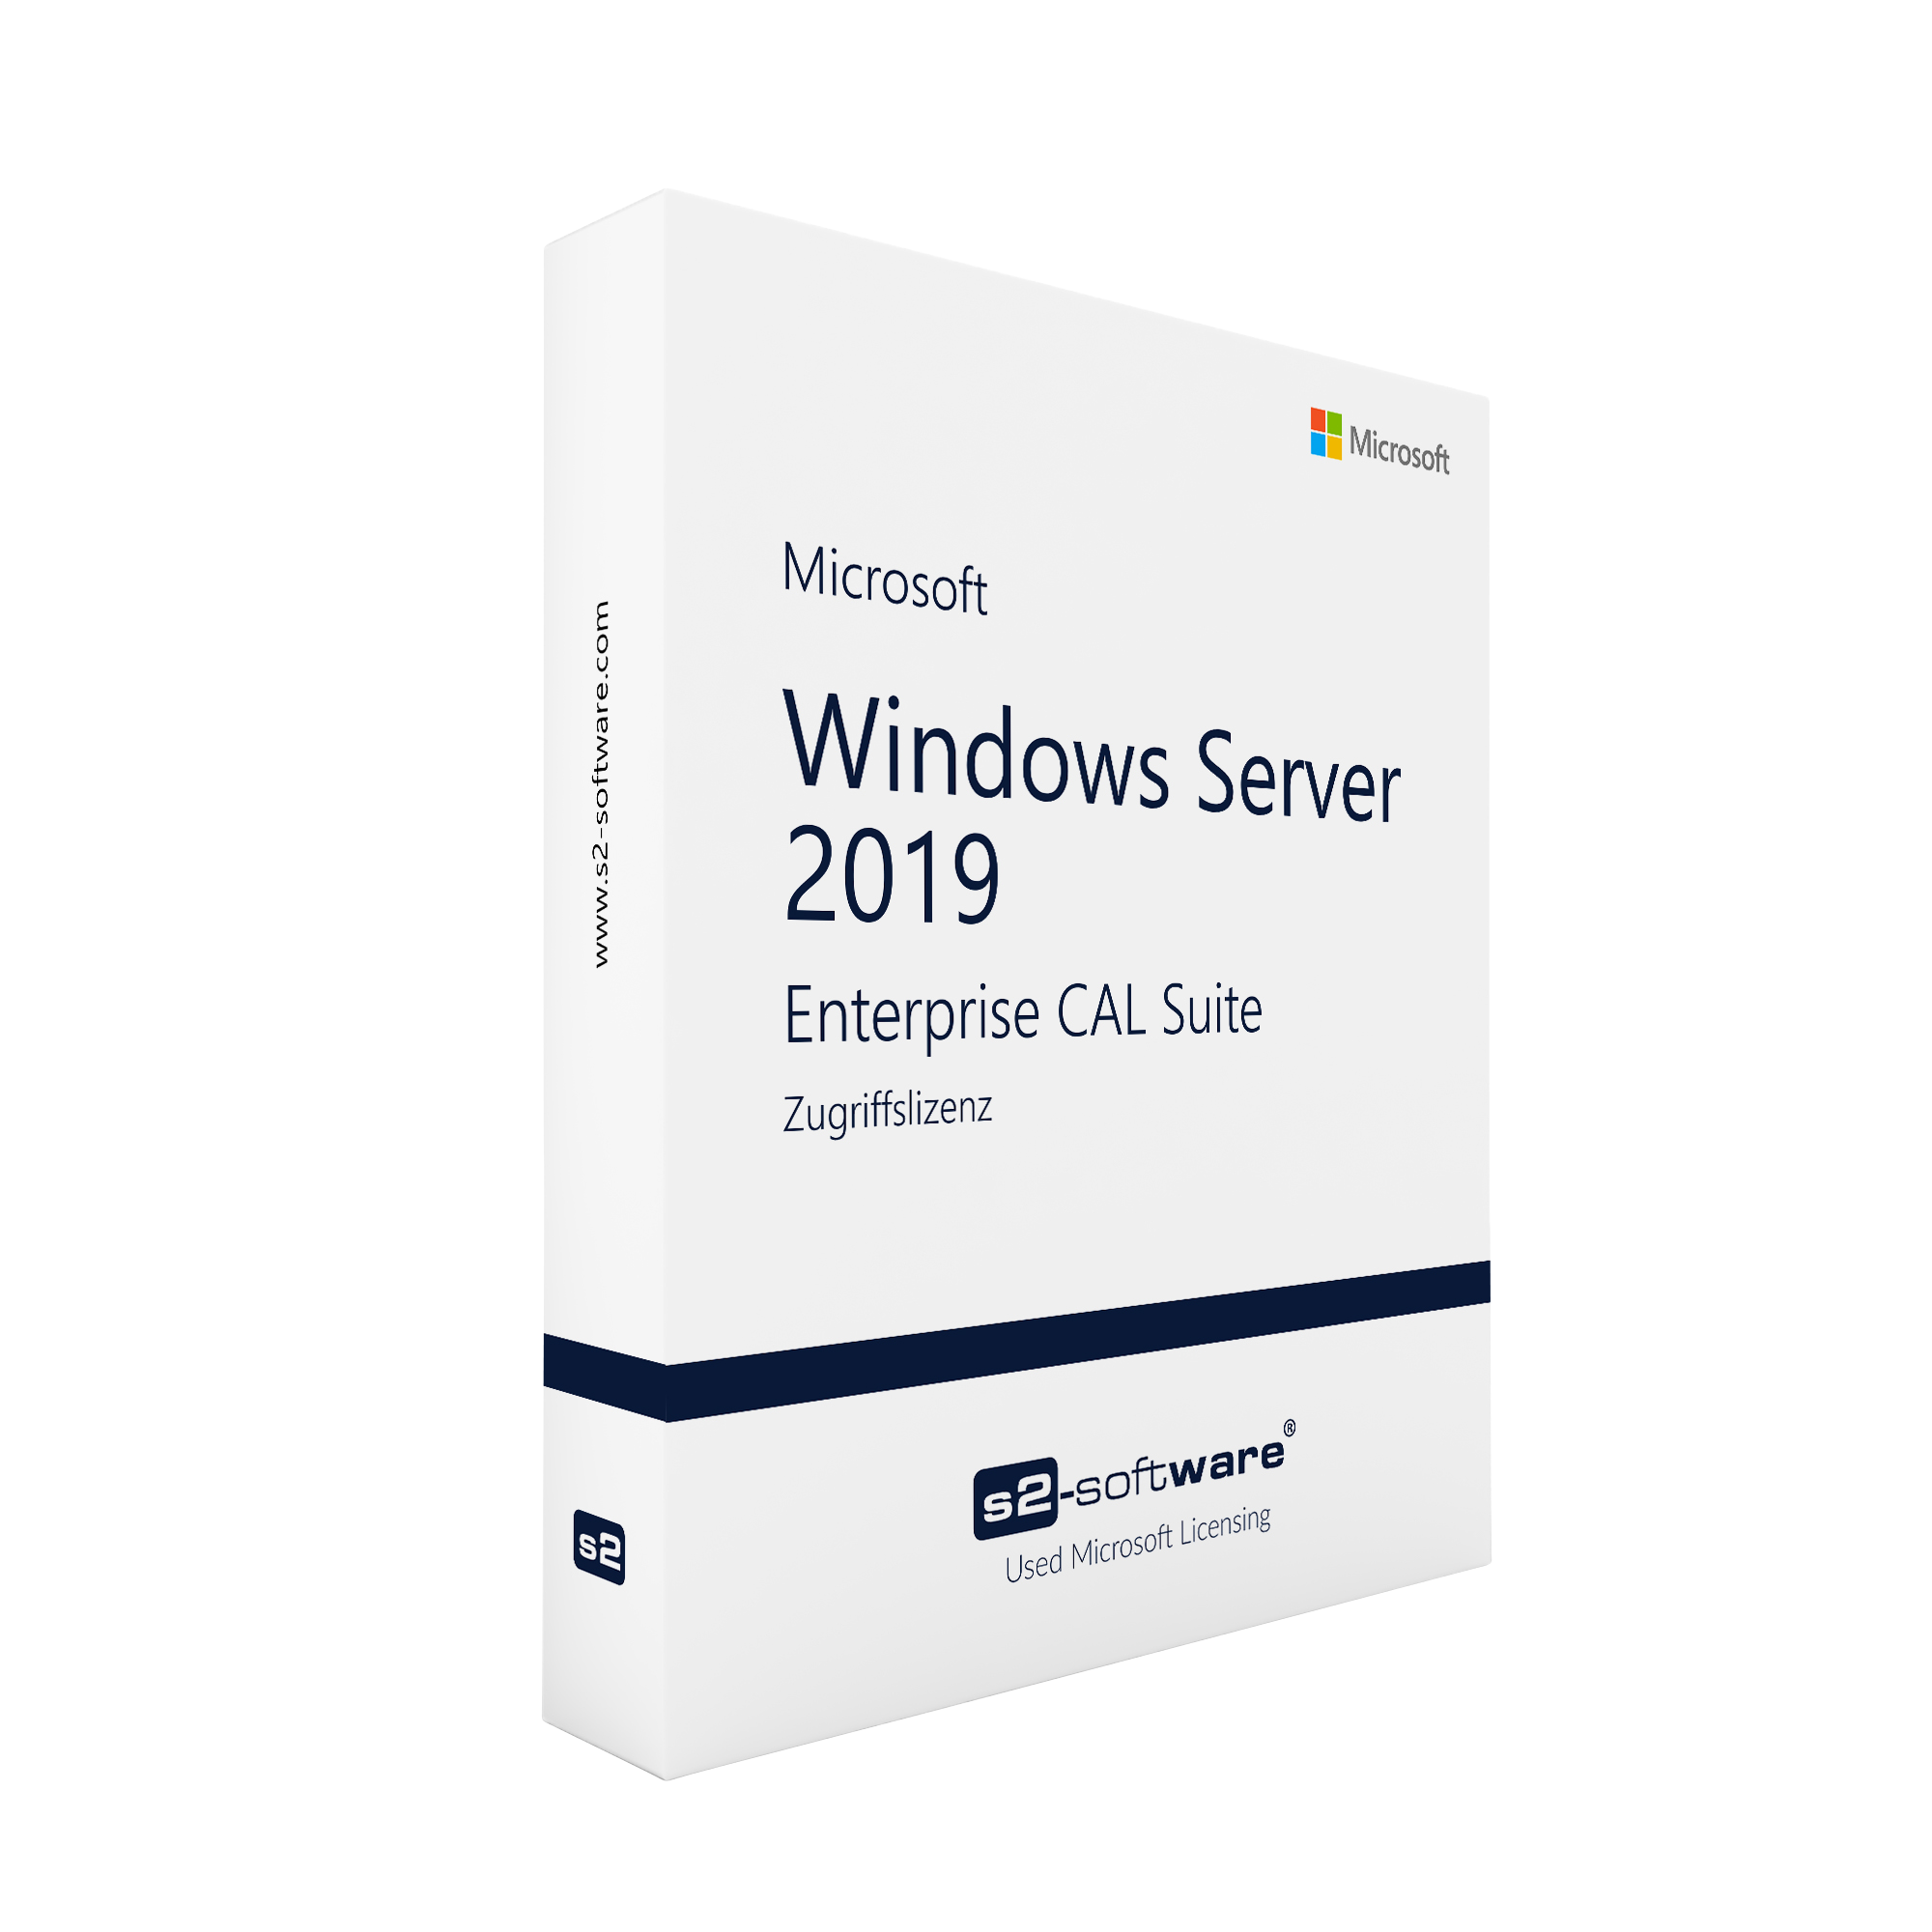 Windows Server Enterprise CAL Suite 2019